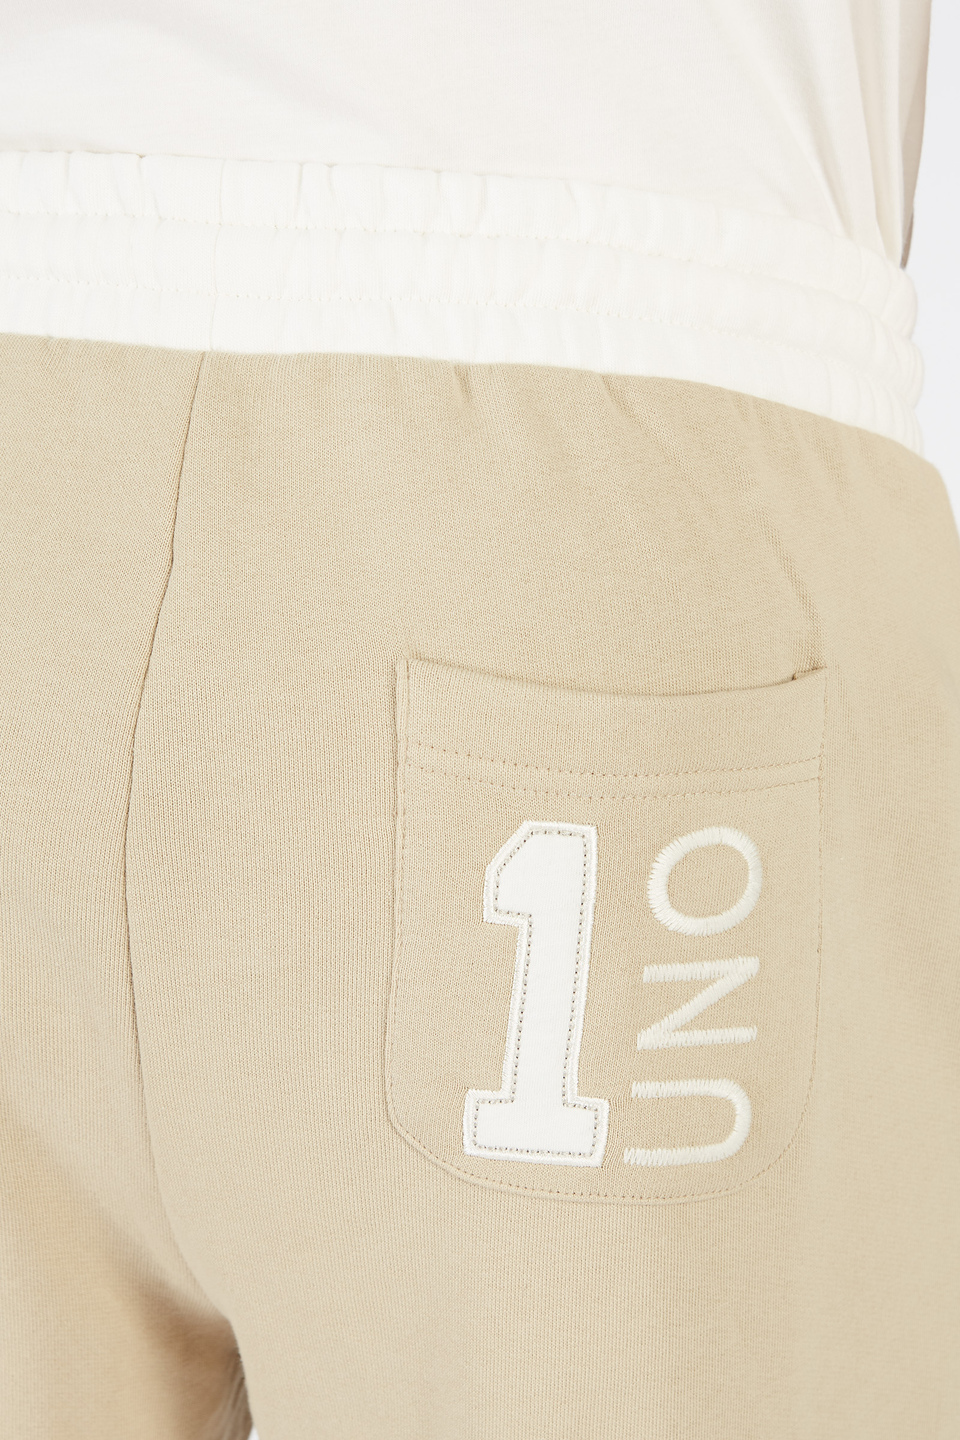 Pantalones de chándal de algodón para hombre ajuste còmodo | La Martina - Official Online Shop